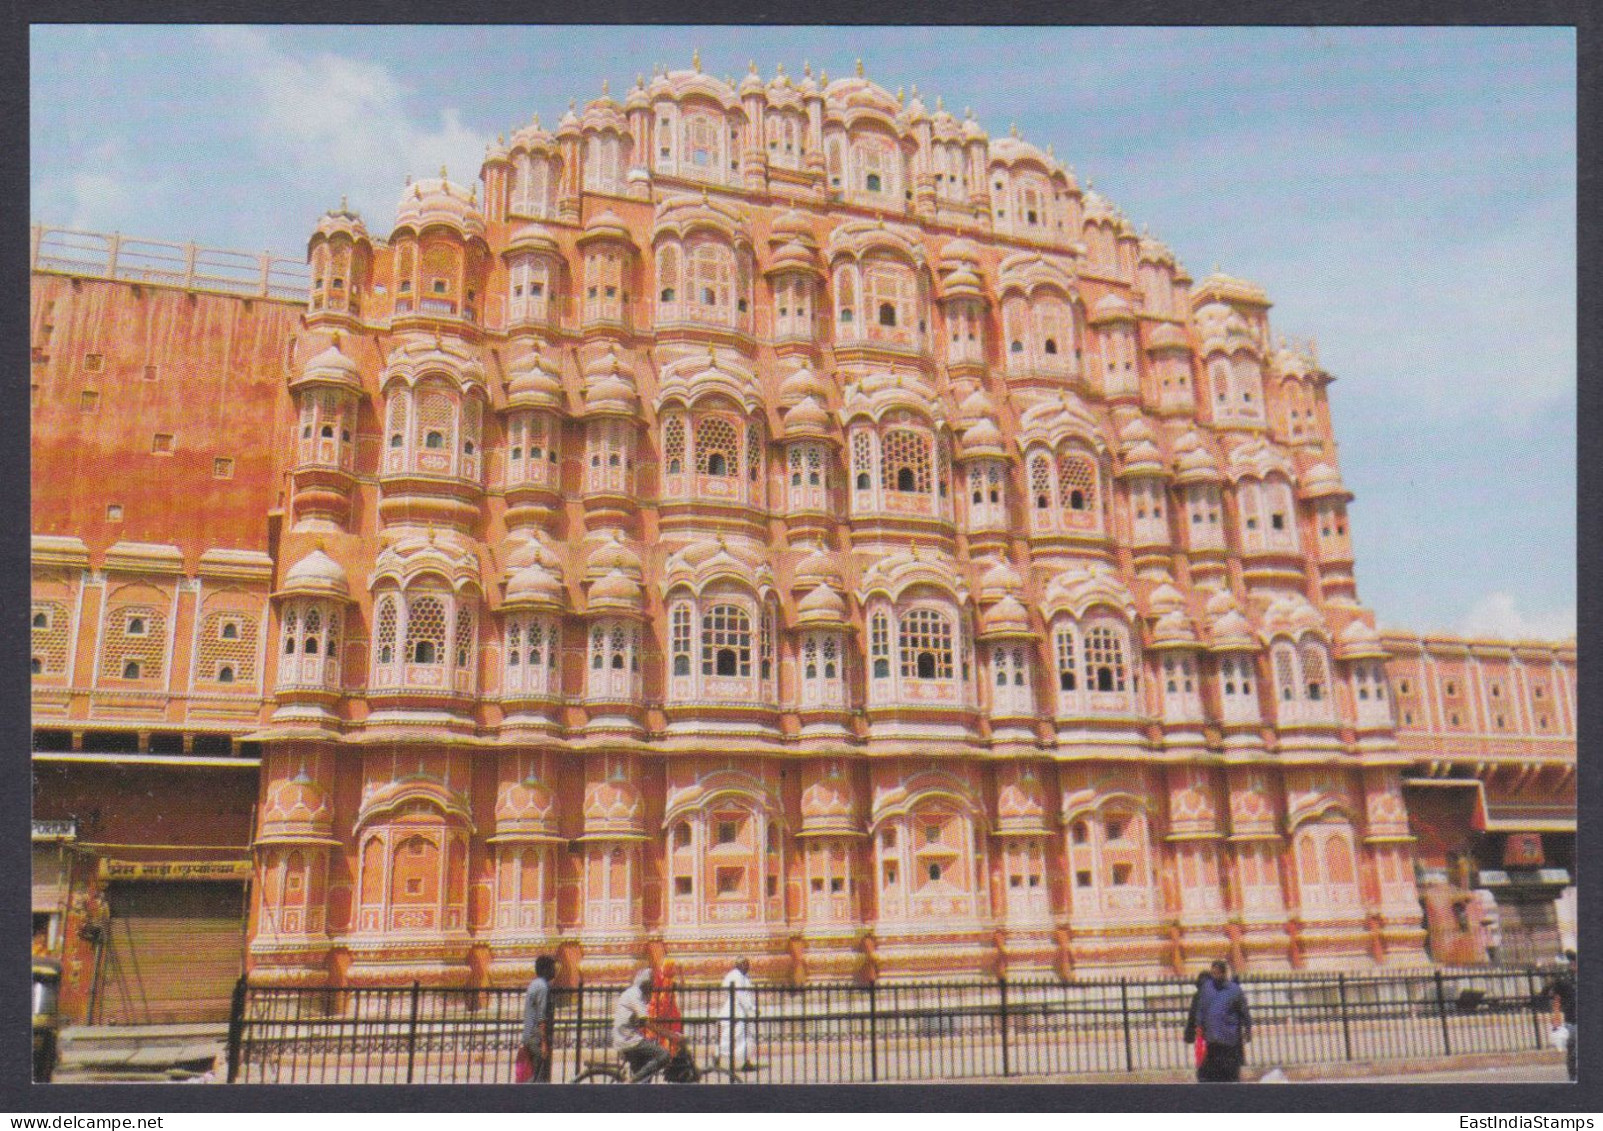 Inde India 2012 Mint Unused Postcard Hawa Mahal, Jaipur, Delhi G.P.O, Architecture, Rajput, Building, Medieval History - India